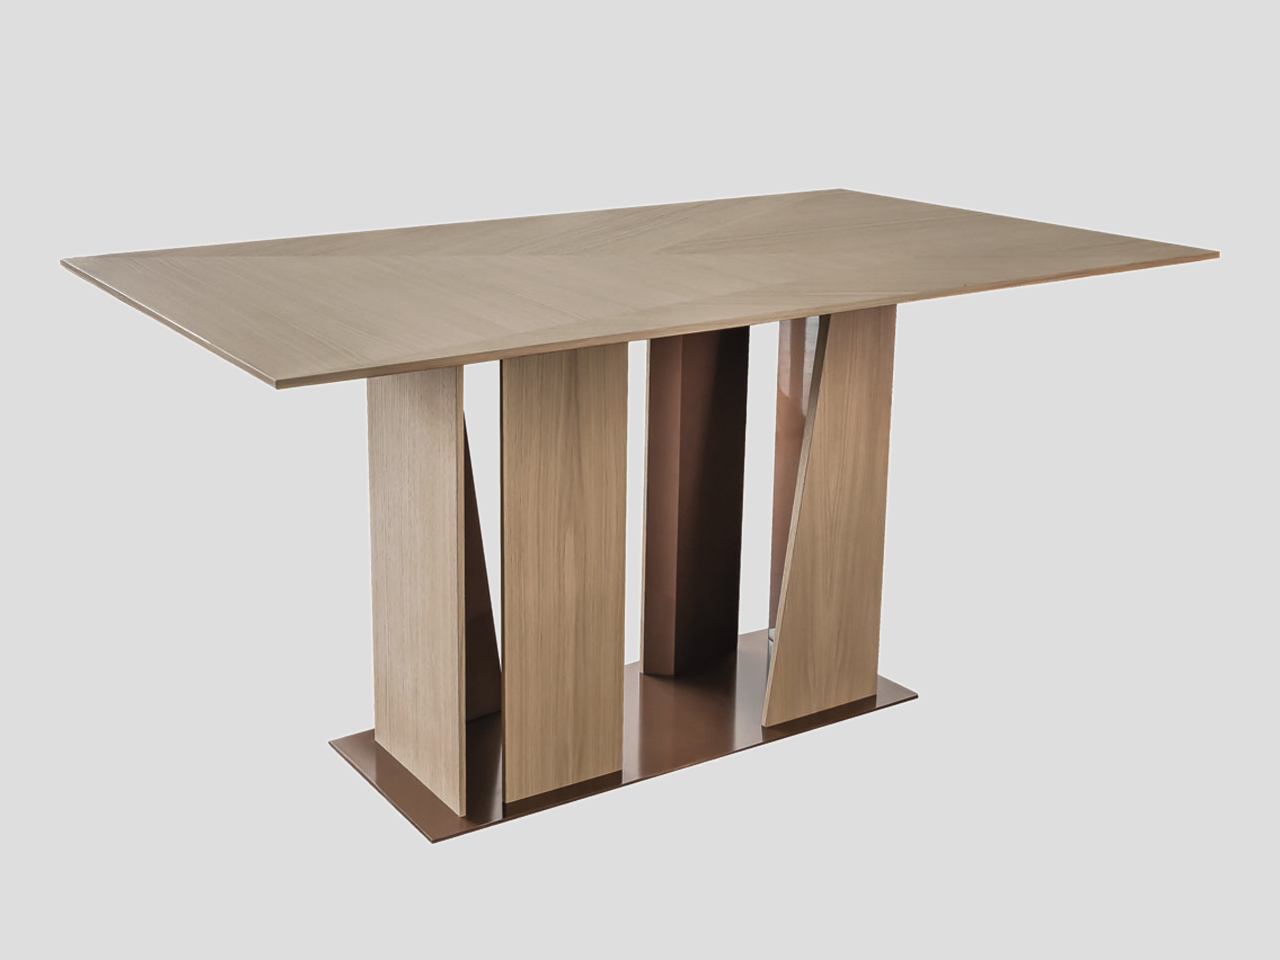 Moderan trpezarijski sto sa centralnom stopom od drveta PRISMA Linea Milanovic